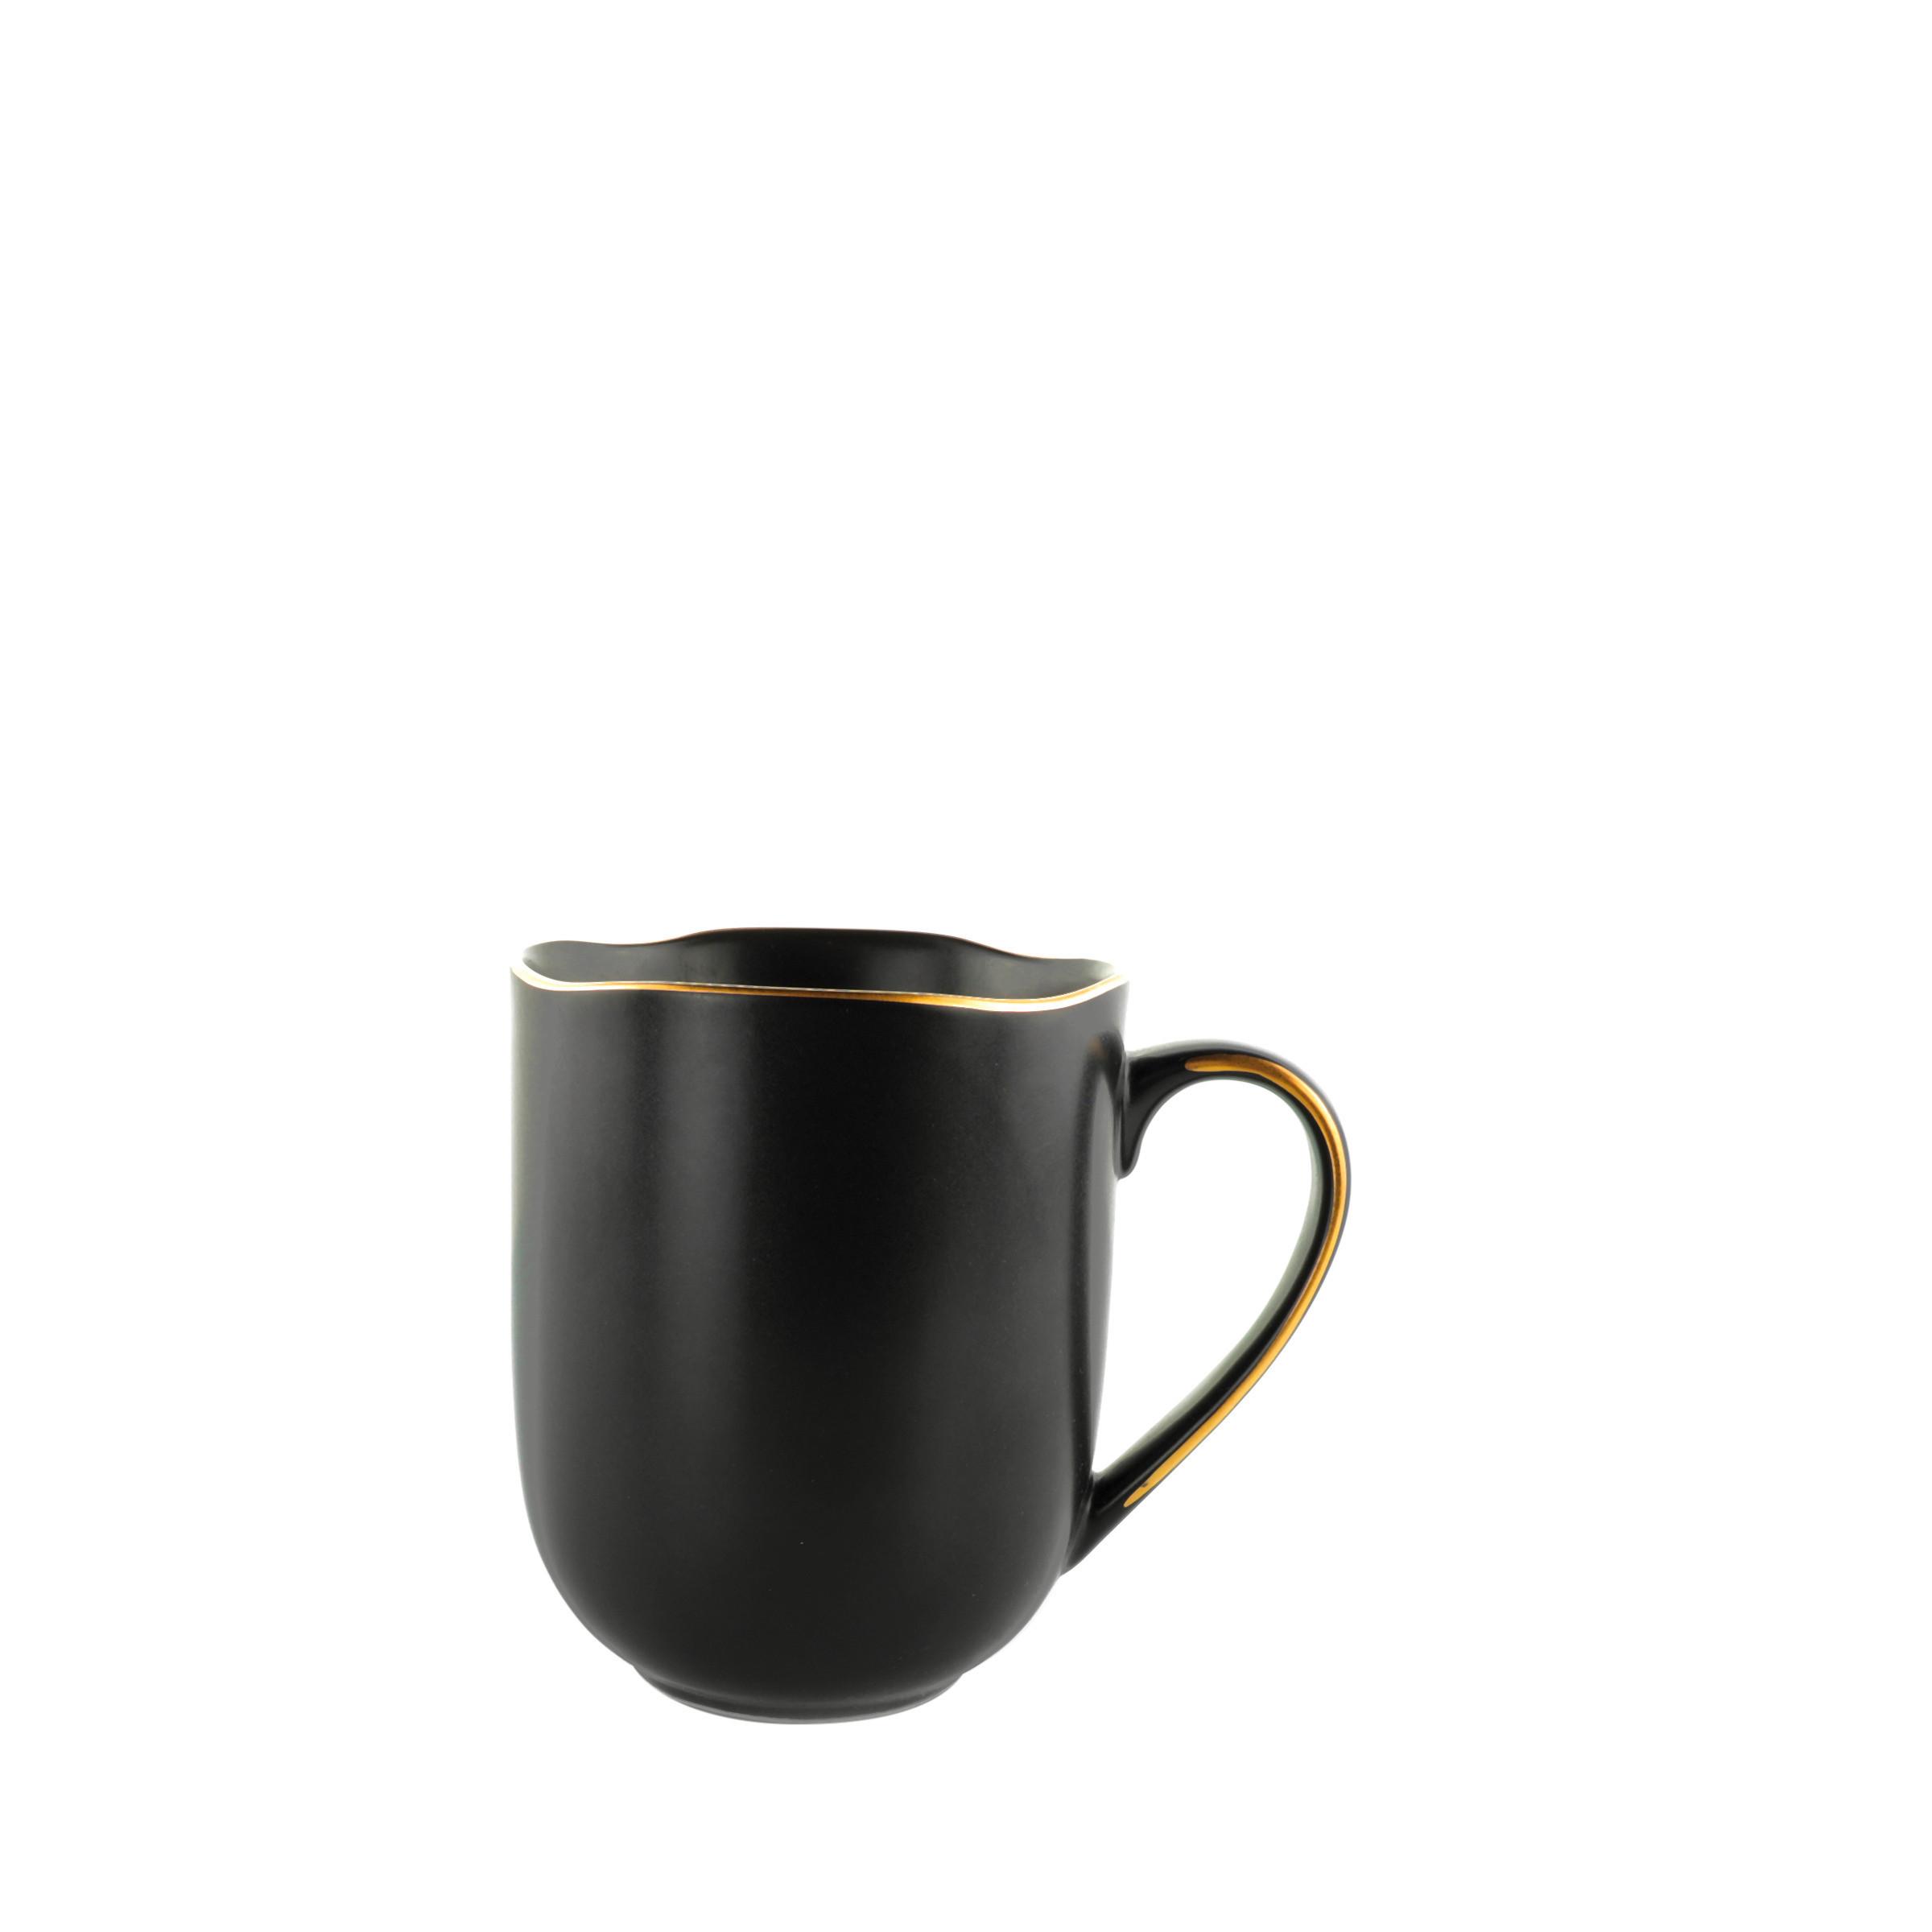 Hrnek Na Kávu Onix - černá/barvy zlata, Moderní, keramika (350ml) - Premium Living